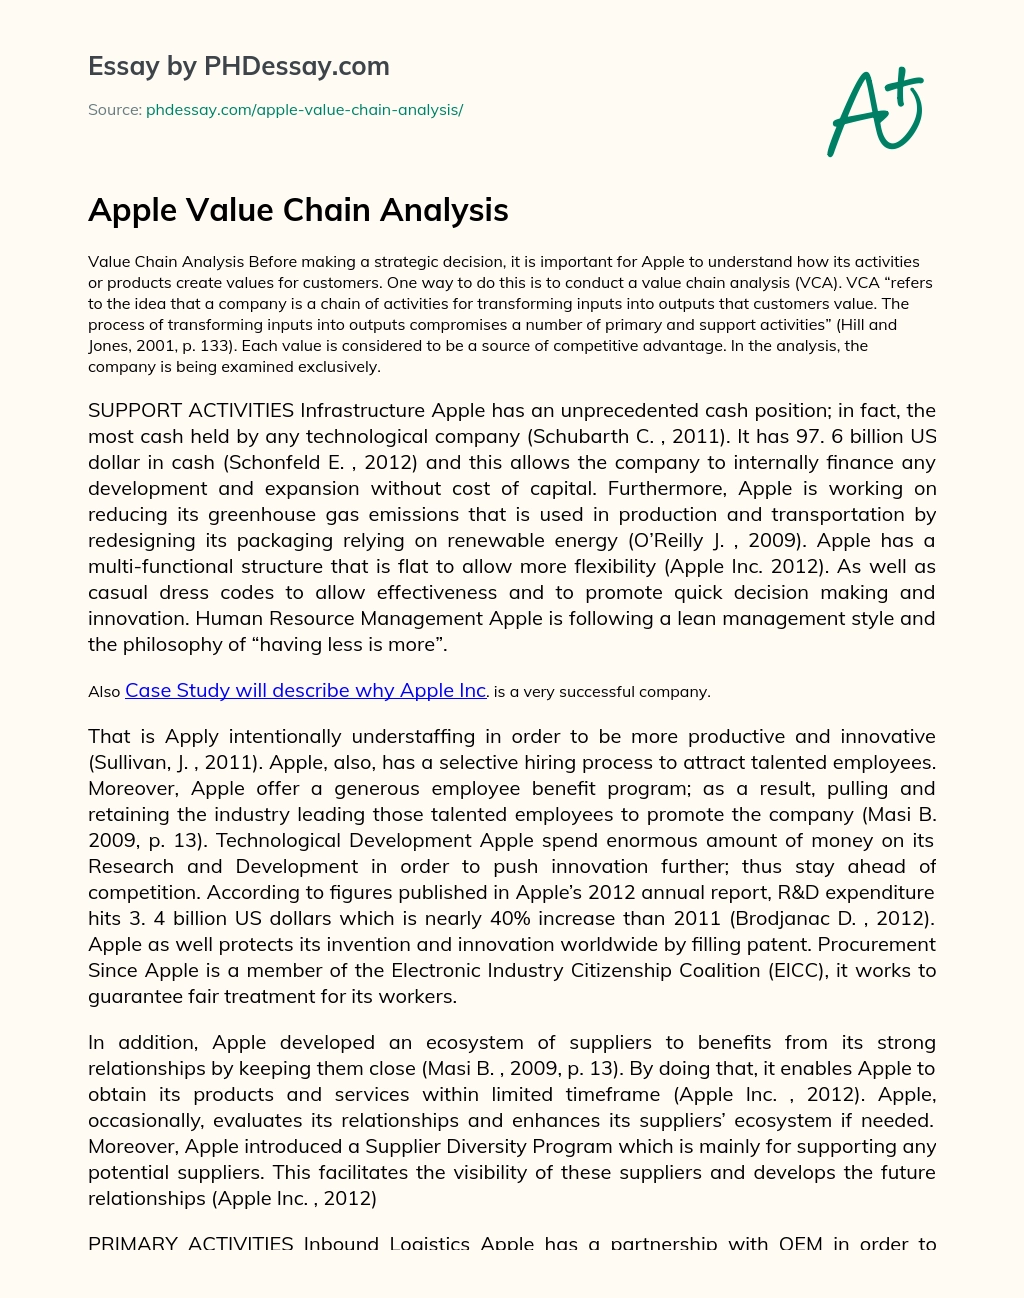 Apple Value Chain Analysis essay